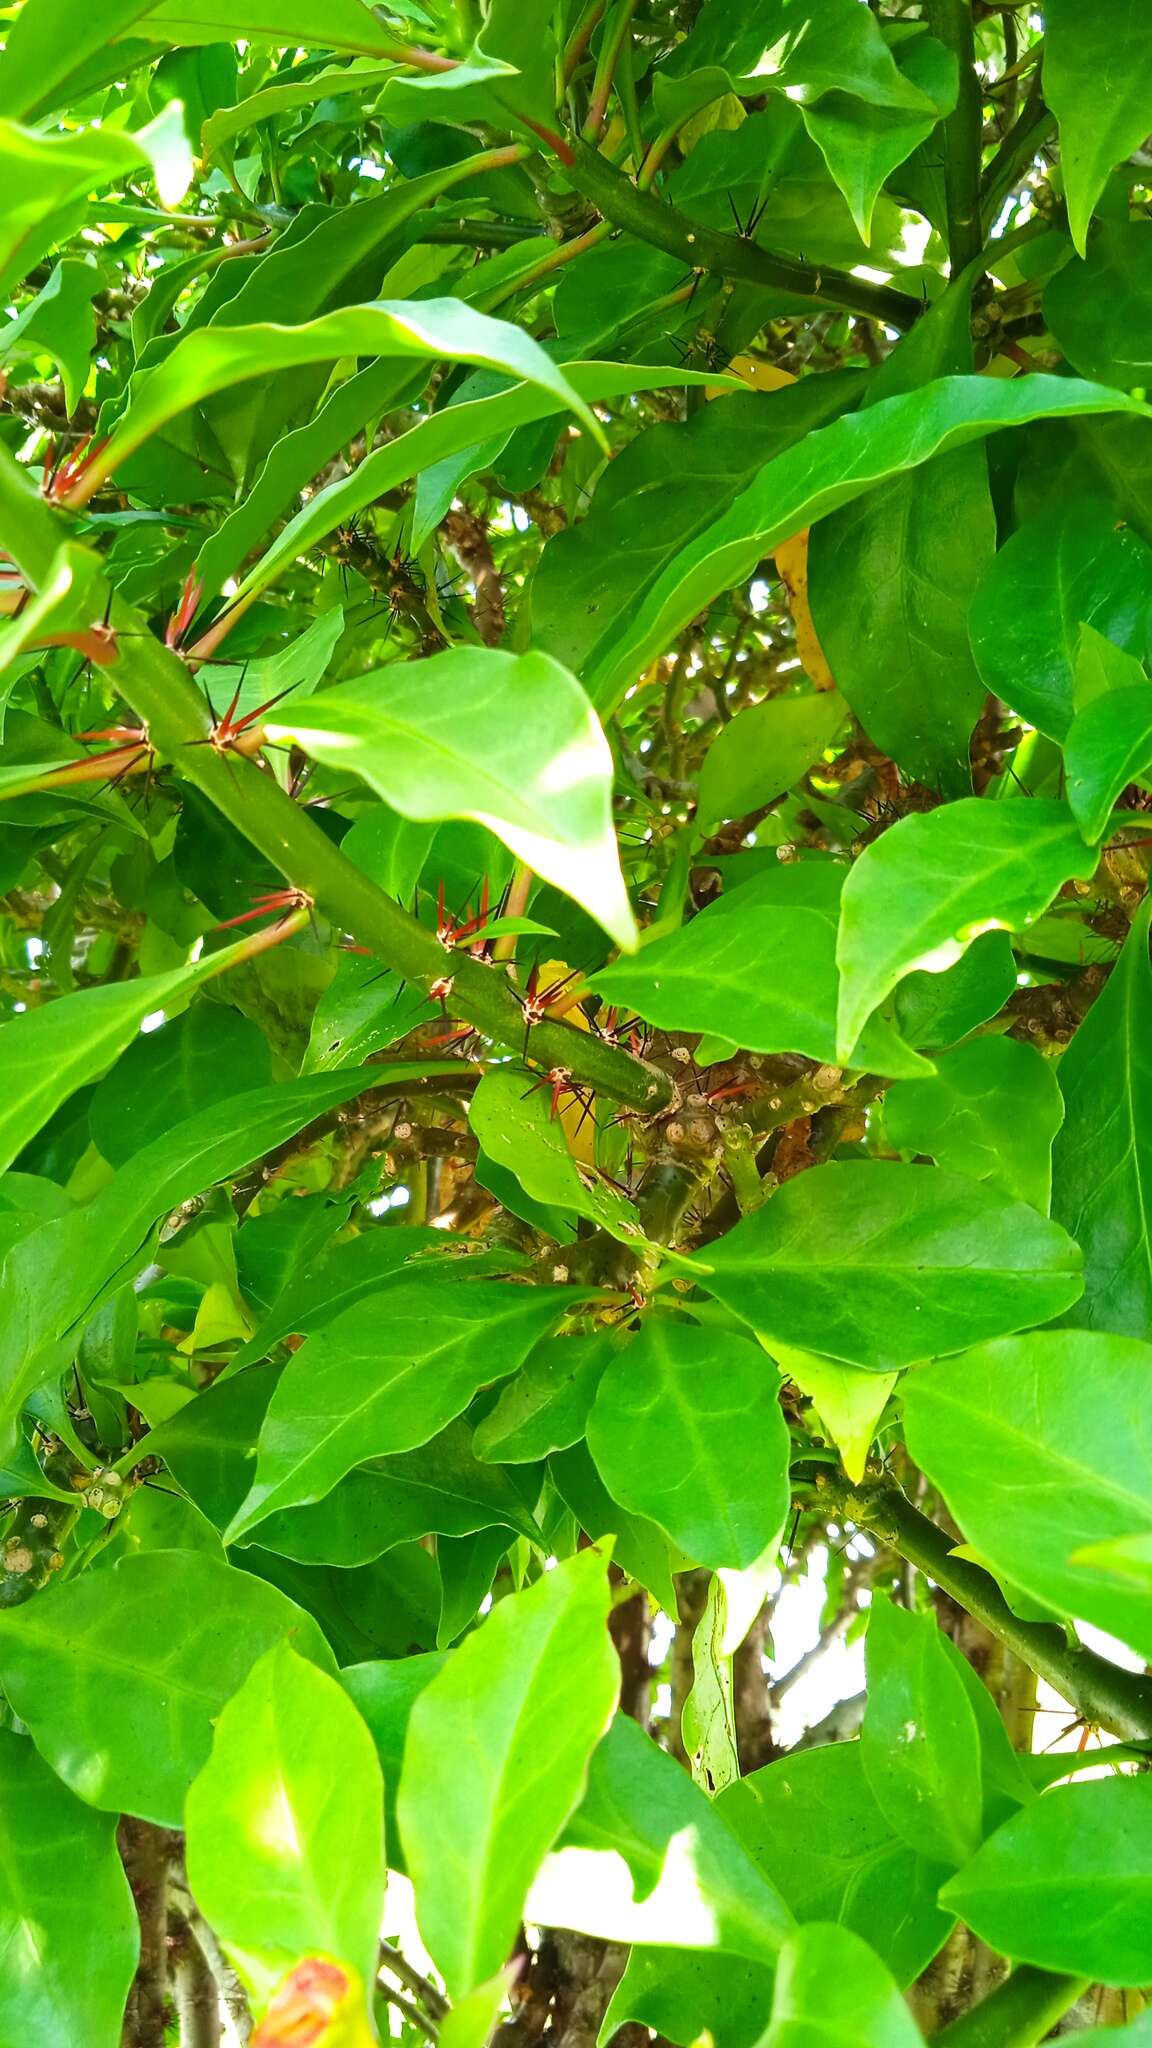 Image of <i>Leuenbergeria bleo</i>